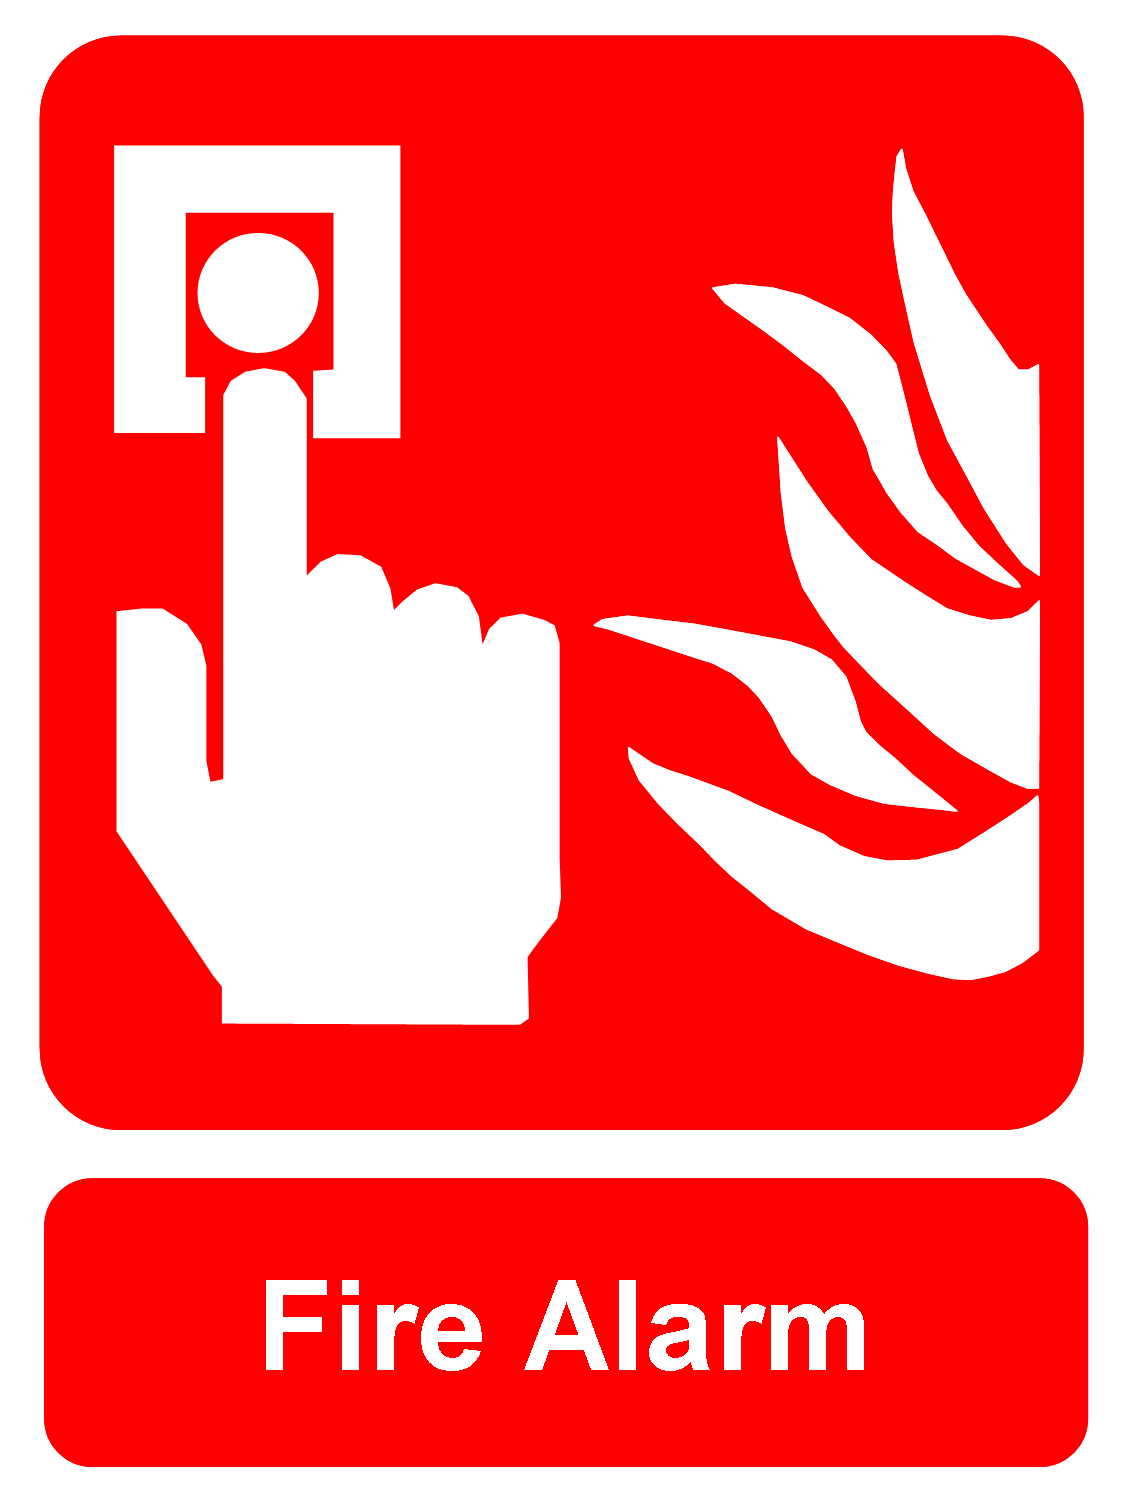 Fire Alarm Clip Art - Fire Alarm Clipart